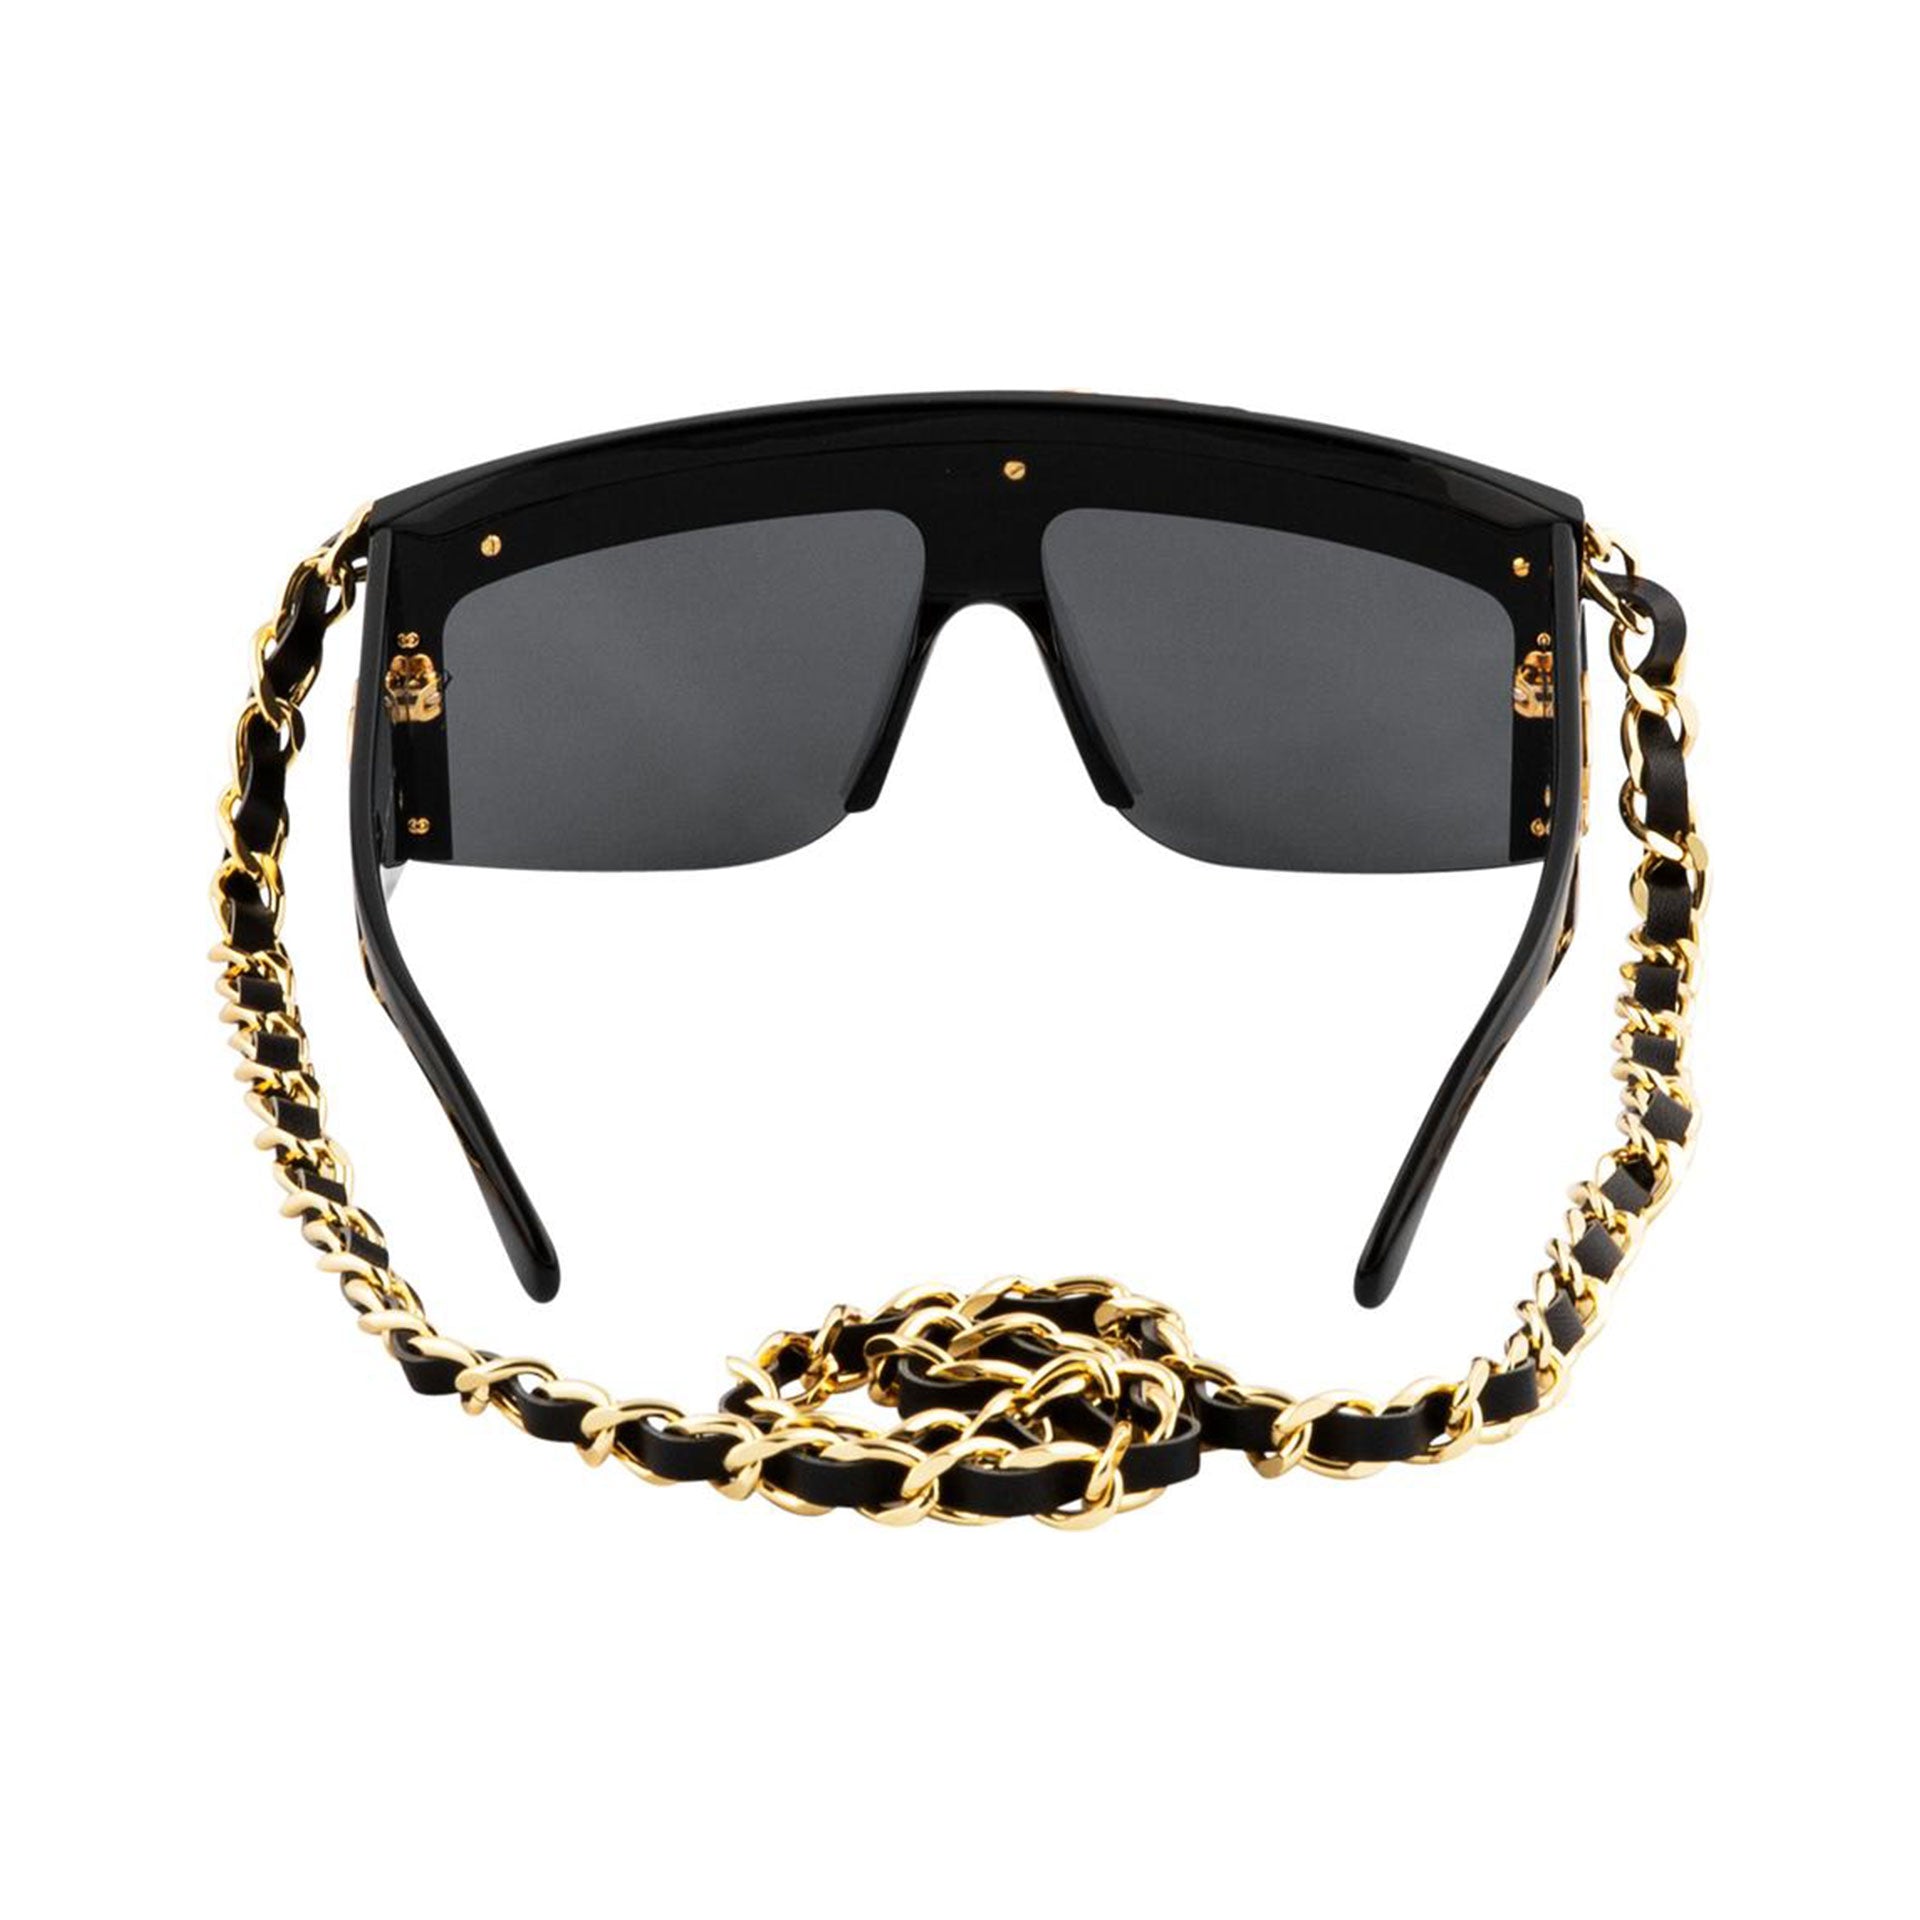 Chanel Vintage Chain-Link Sunglasses - Black Sunglasses, Accessories -  CHA448175